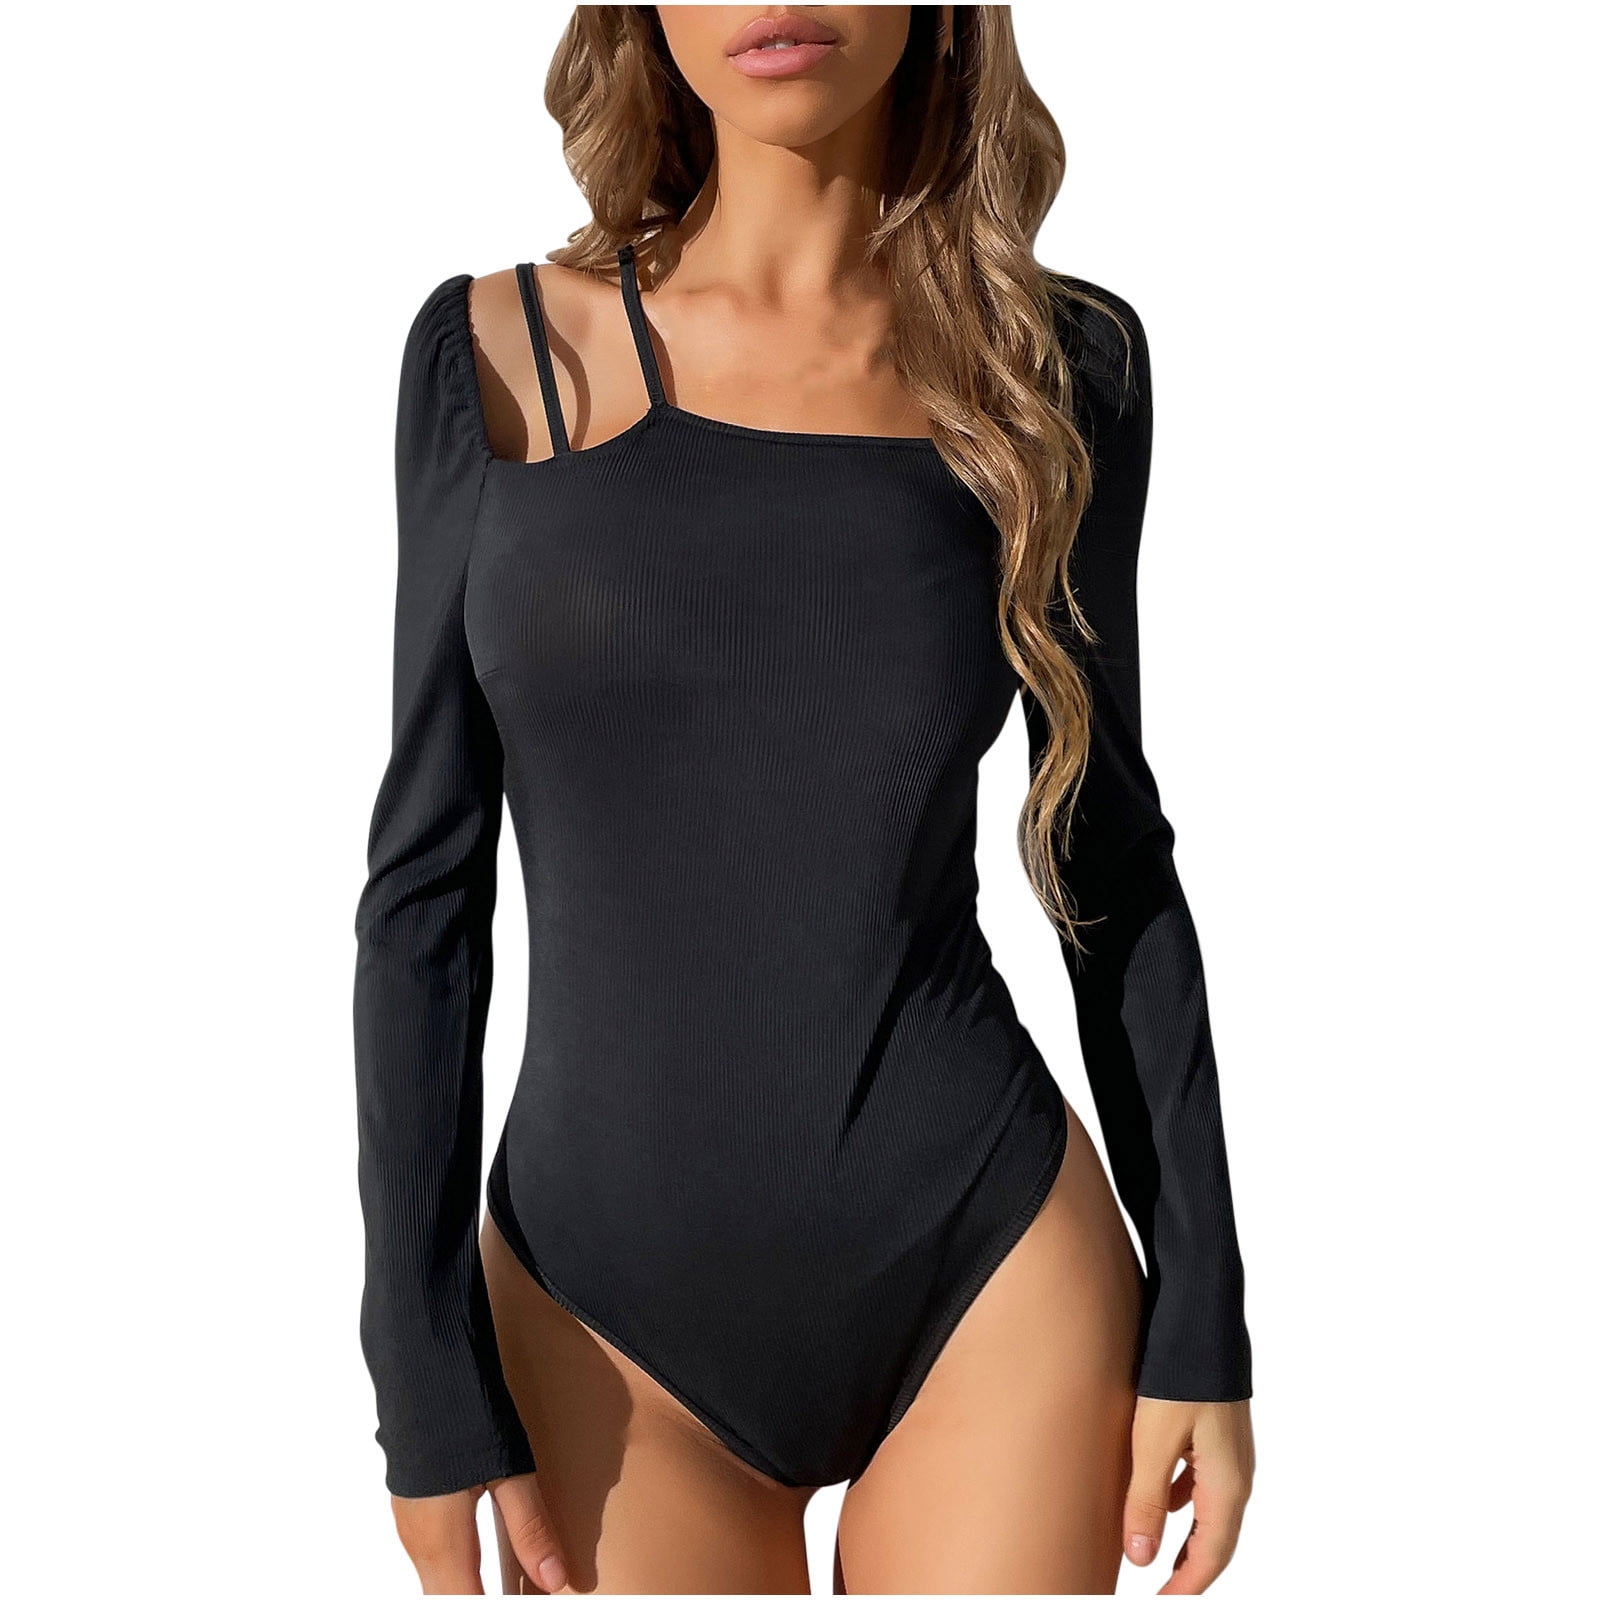 Sexy Black Bodysuit For Women Long Sleeve Bodysuits 2020 Solid